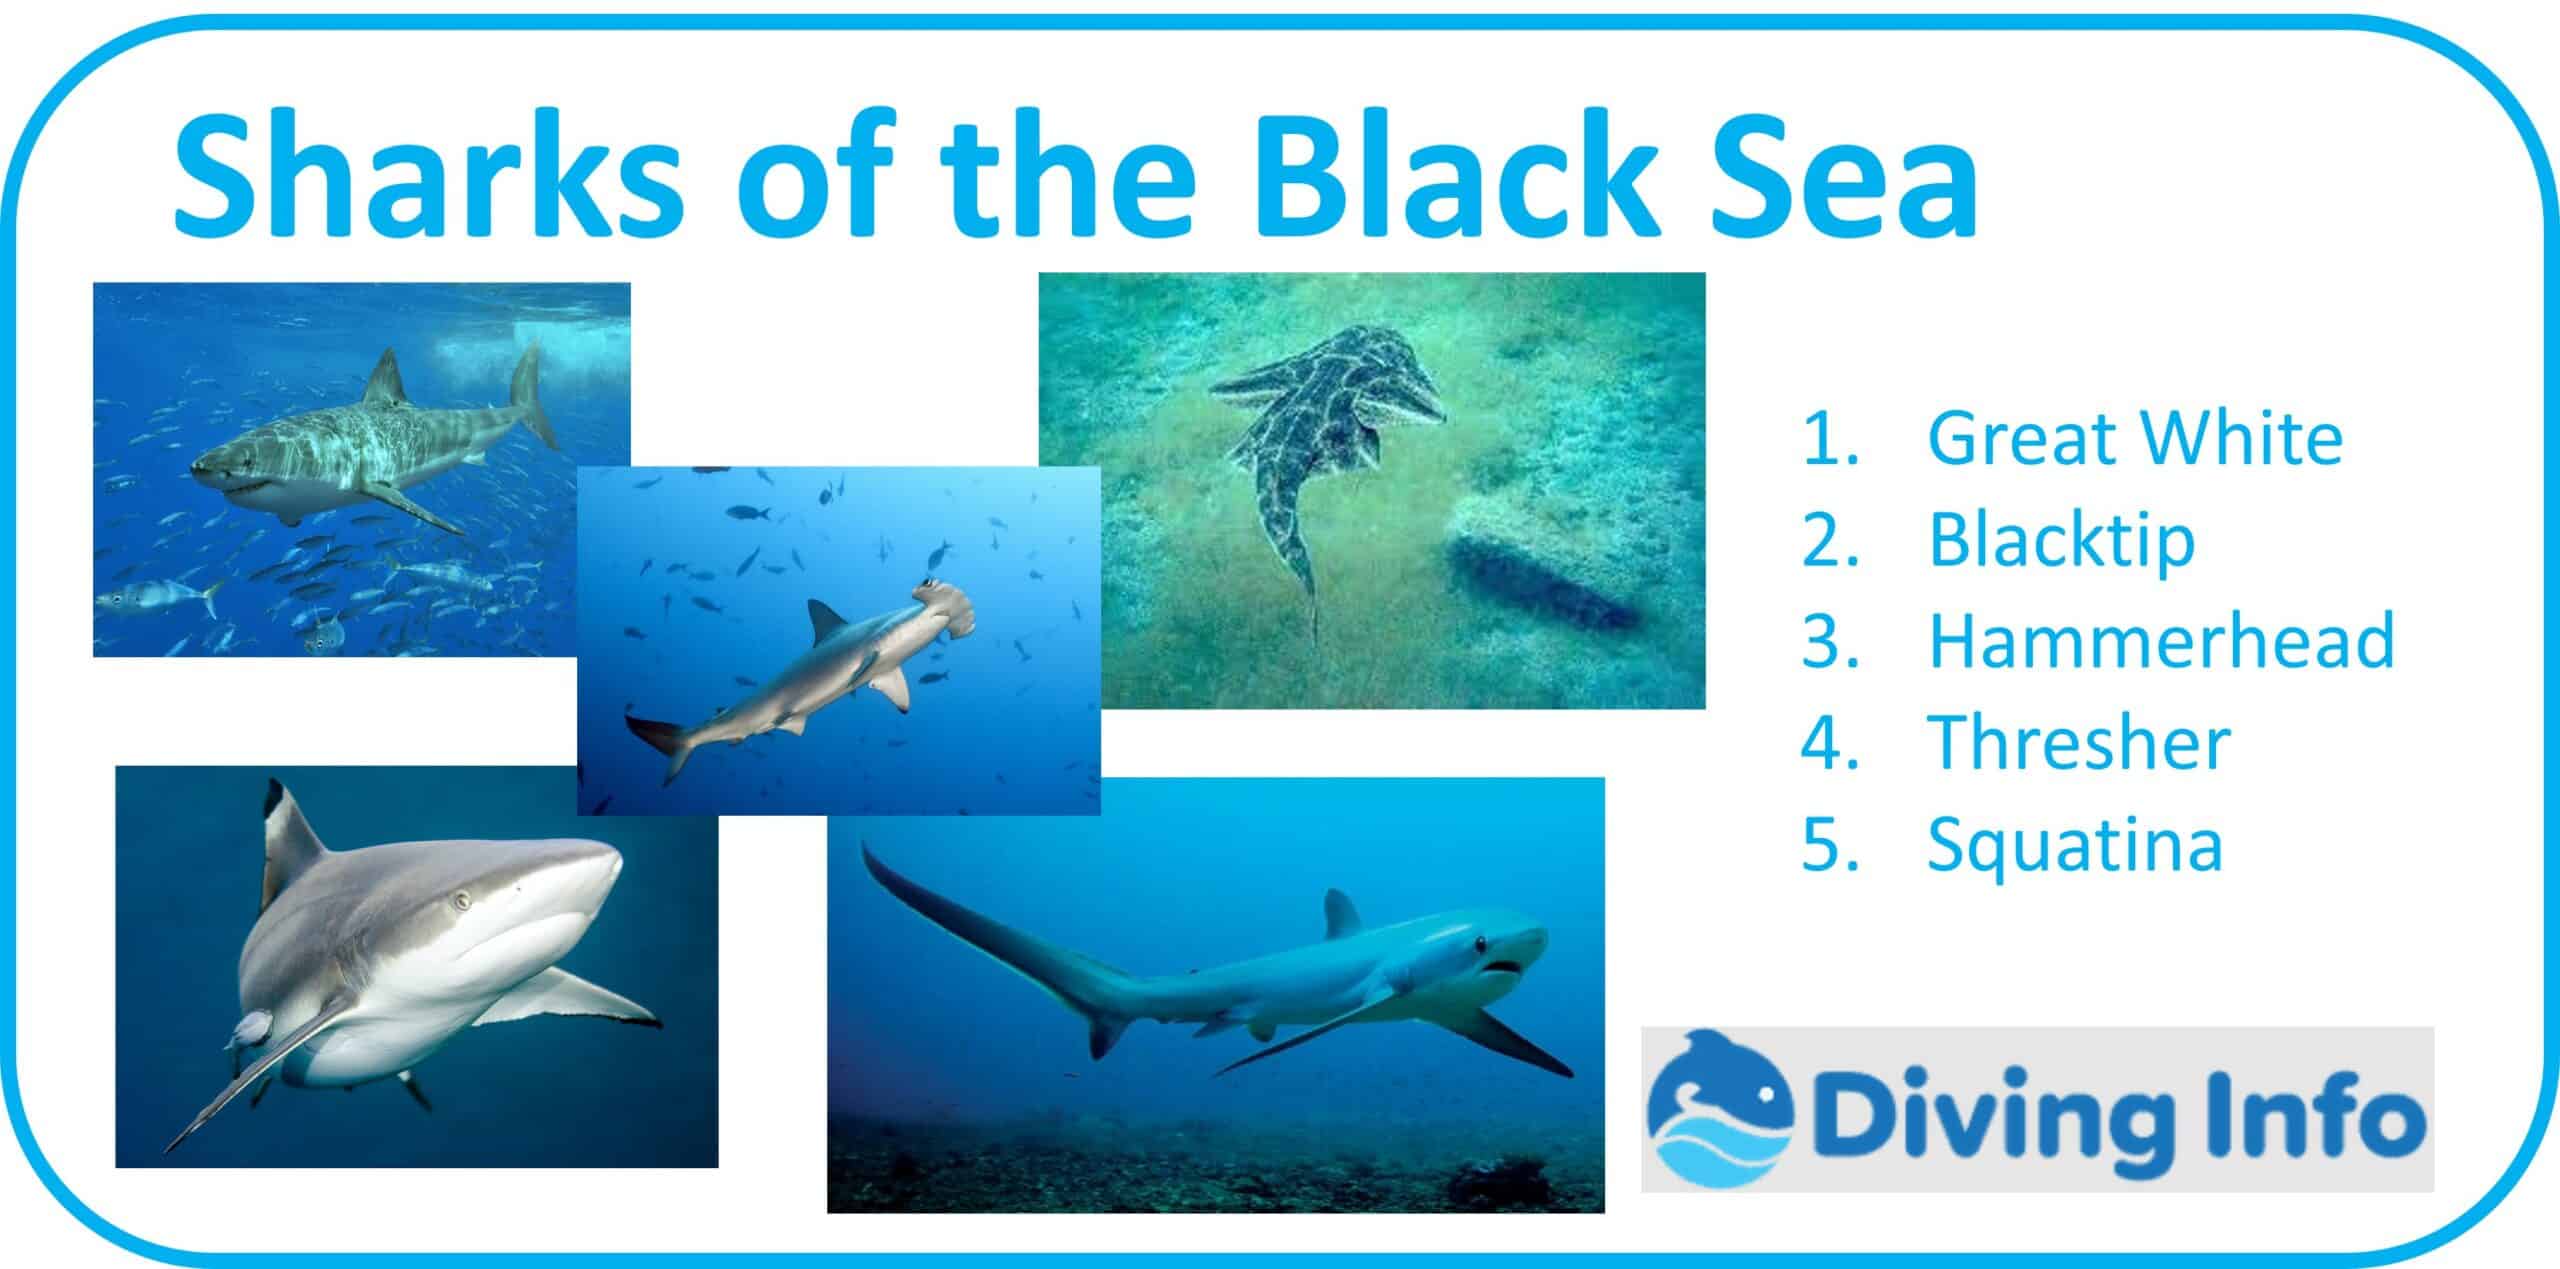 Sharks of the Black Sea